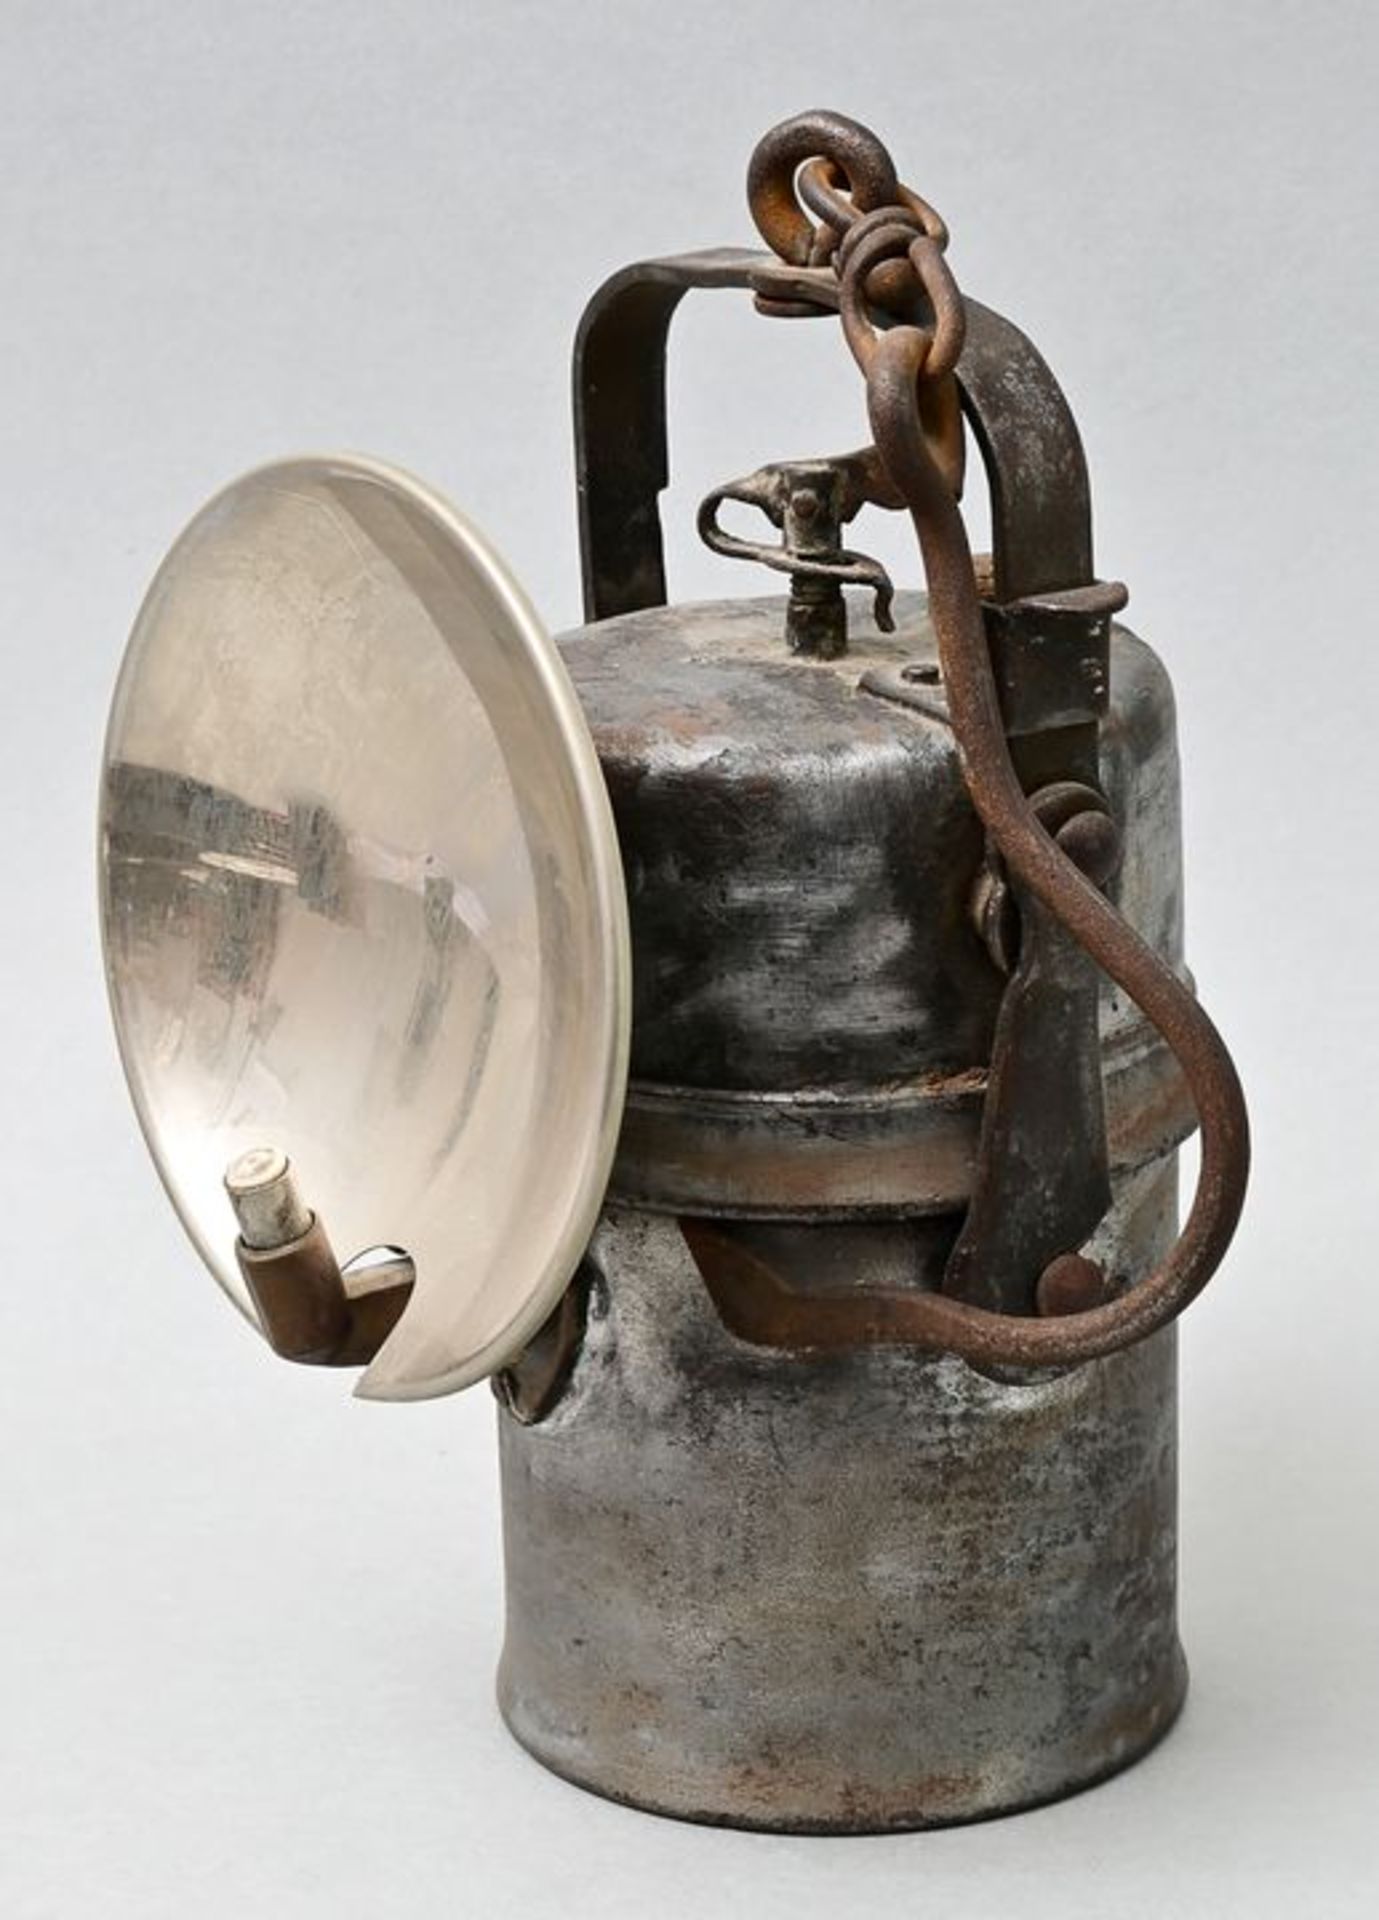 Grubenlampe Karbid/ miner's lamp